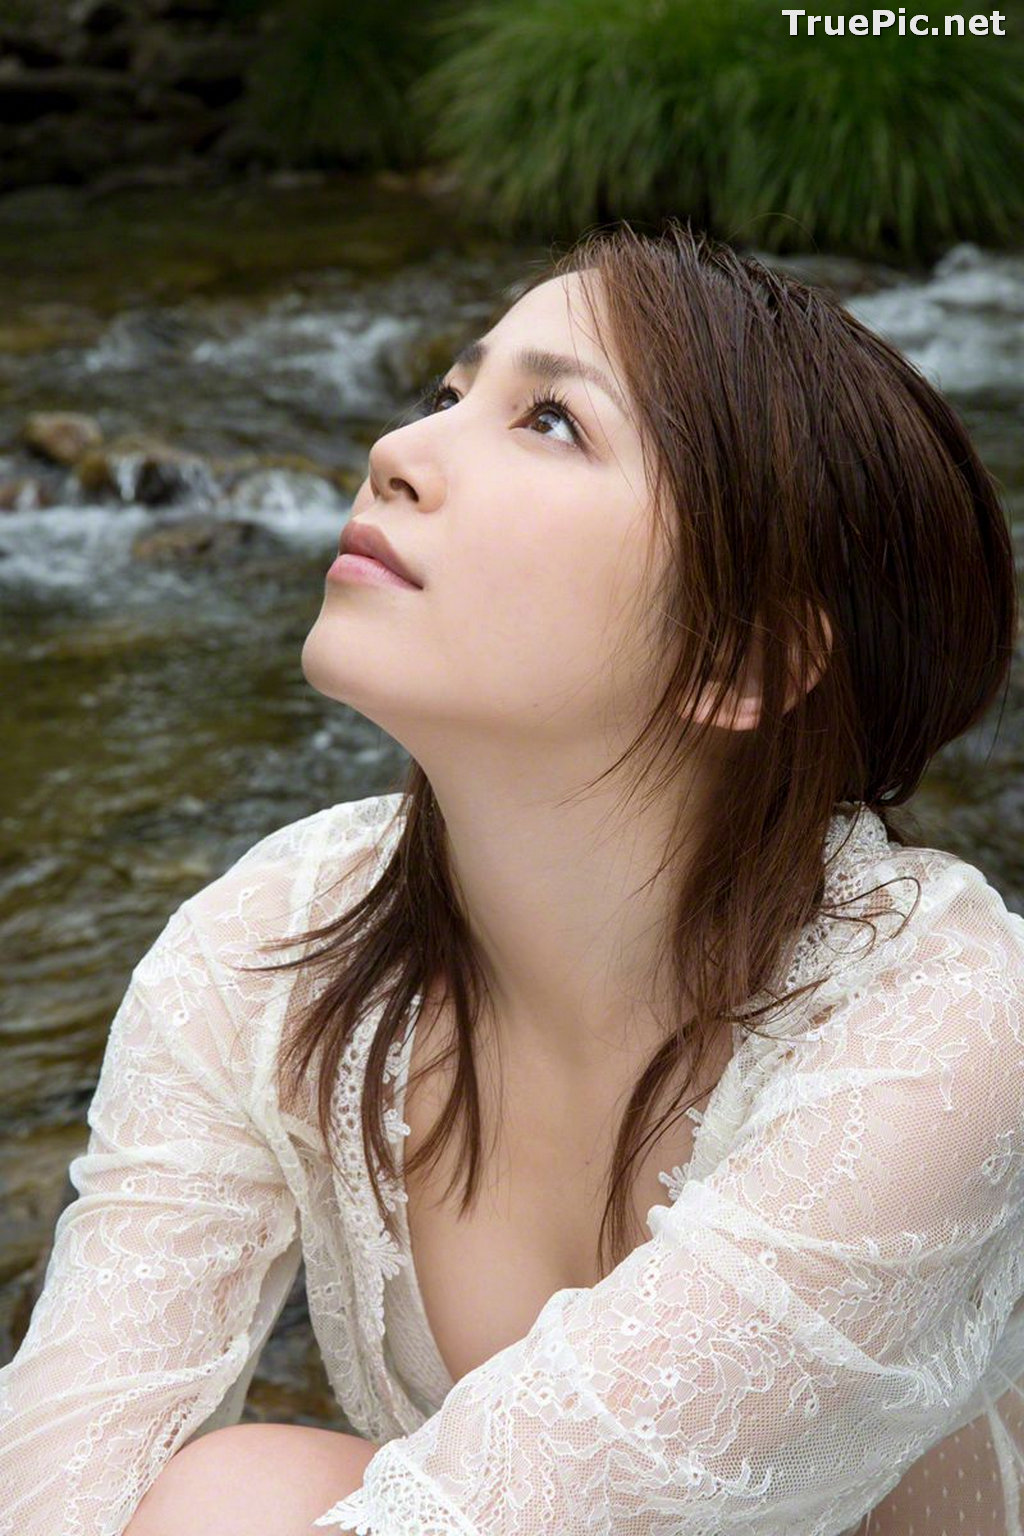 Image [Wanibooks Jacket] No.129 - Japanese Singer and Actress - You Kikkawa - TruePic.net - Picture-81